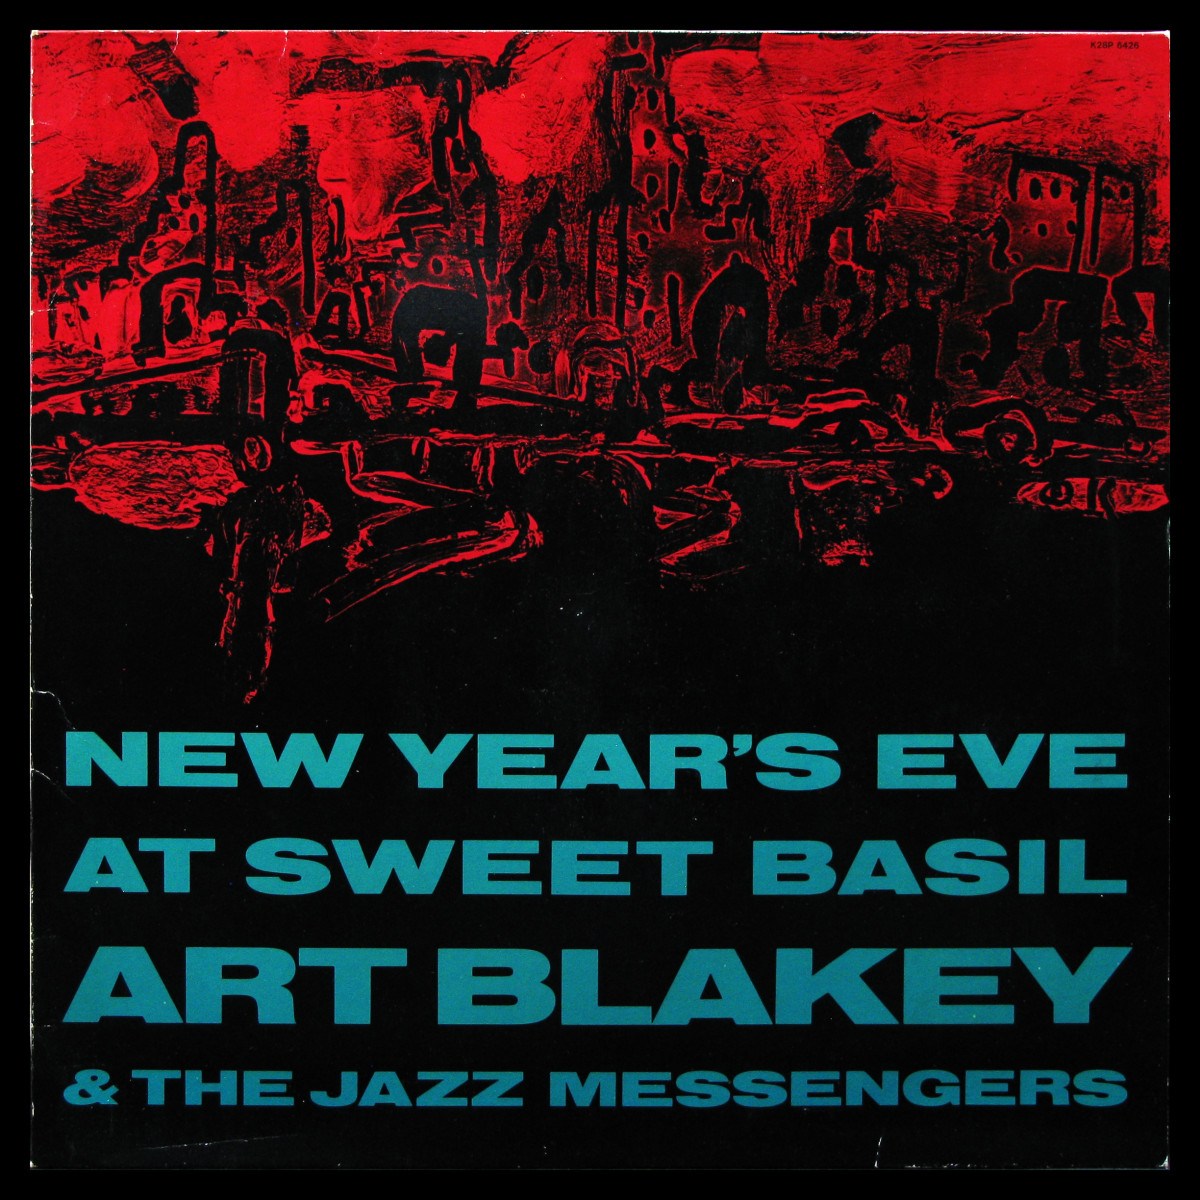 LP Art Blakey & The Jazz Messengers — New Year's Eve At Sweet Basil фото